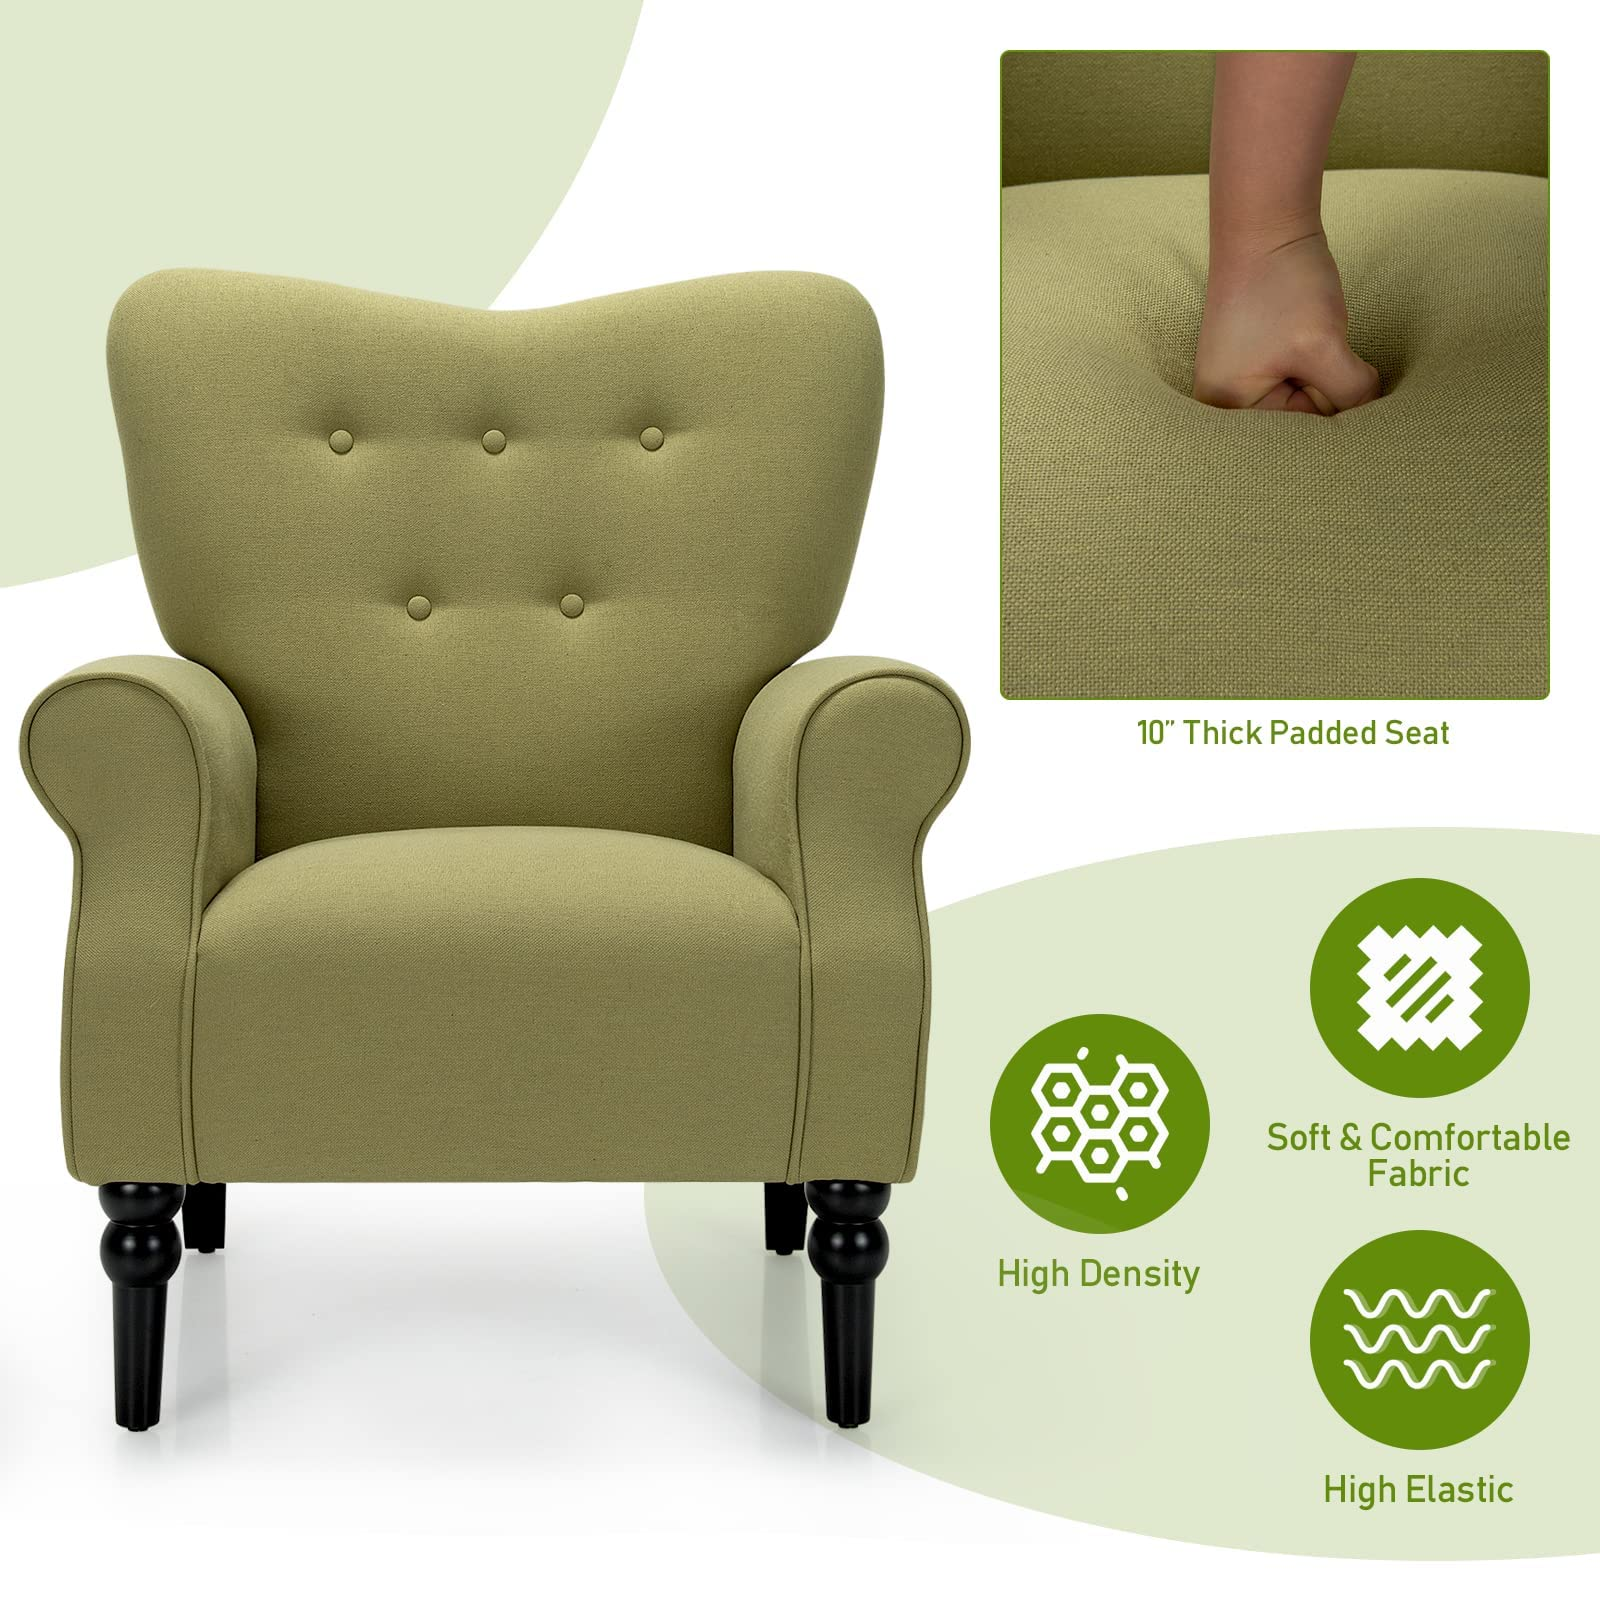 Giantex Yellow/ Avocado Green Fabric Accent Chair